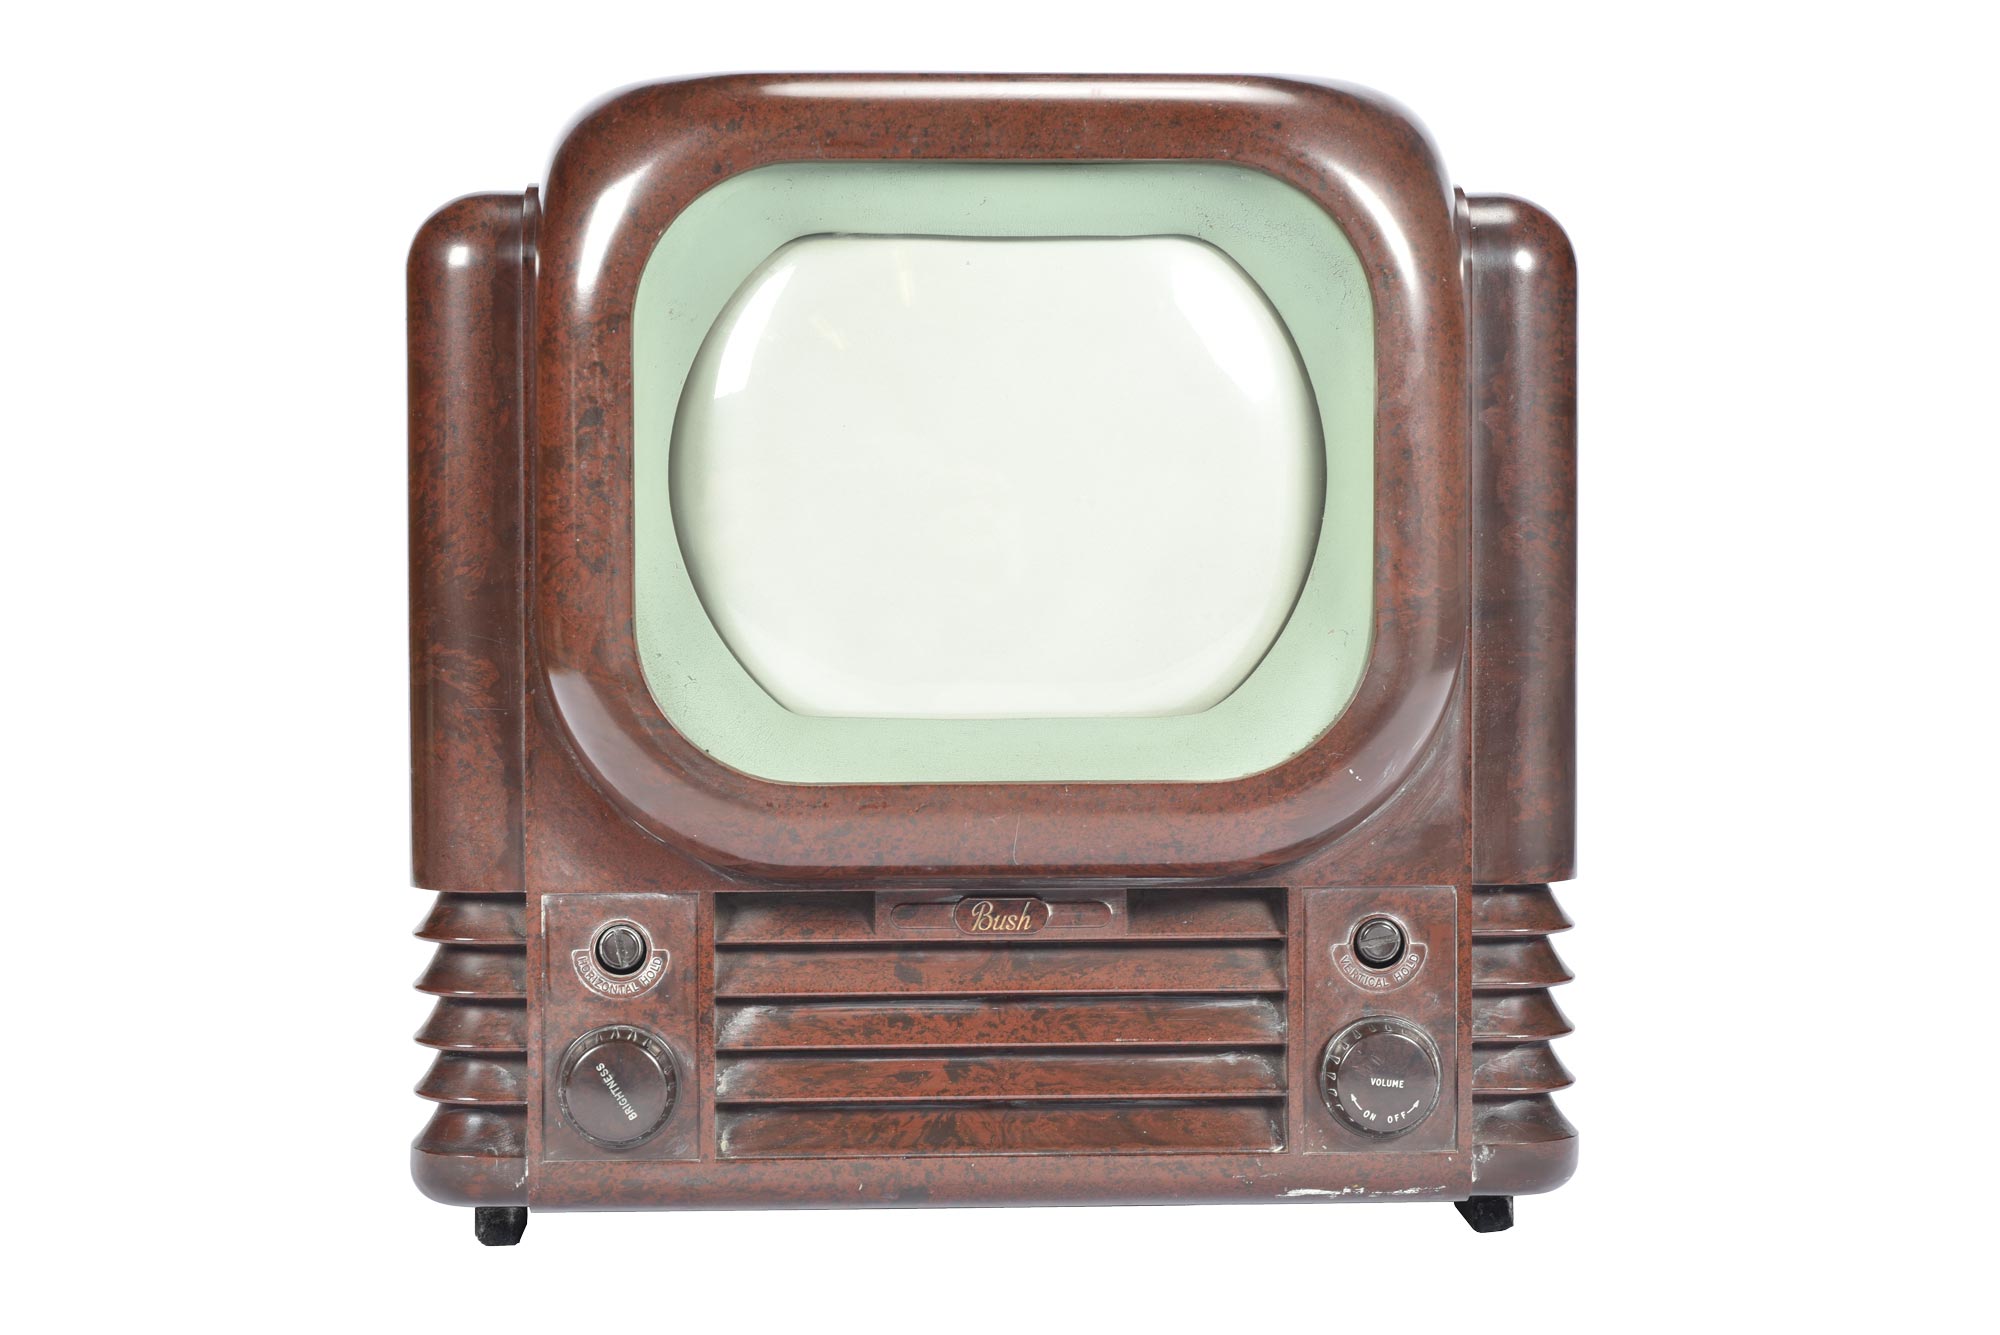 Bush TV22 Television Receiver, 1945-1955